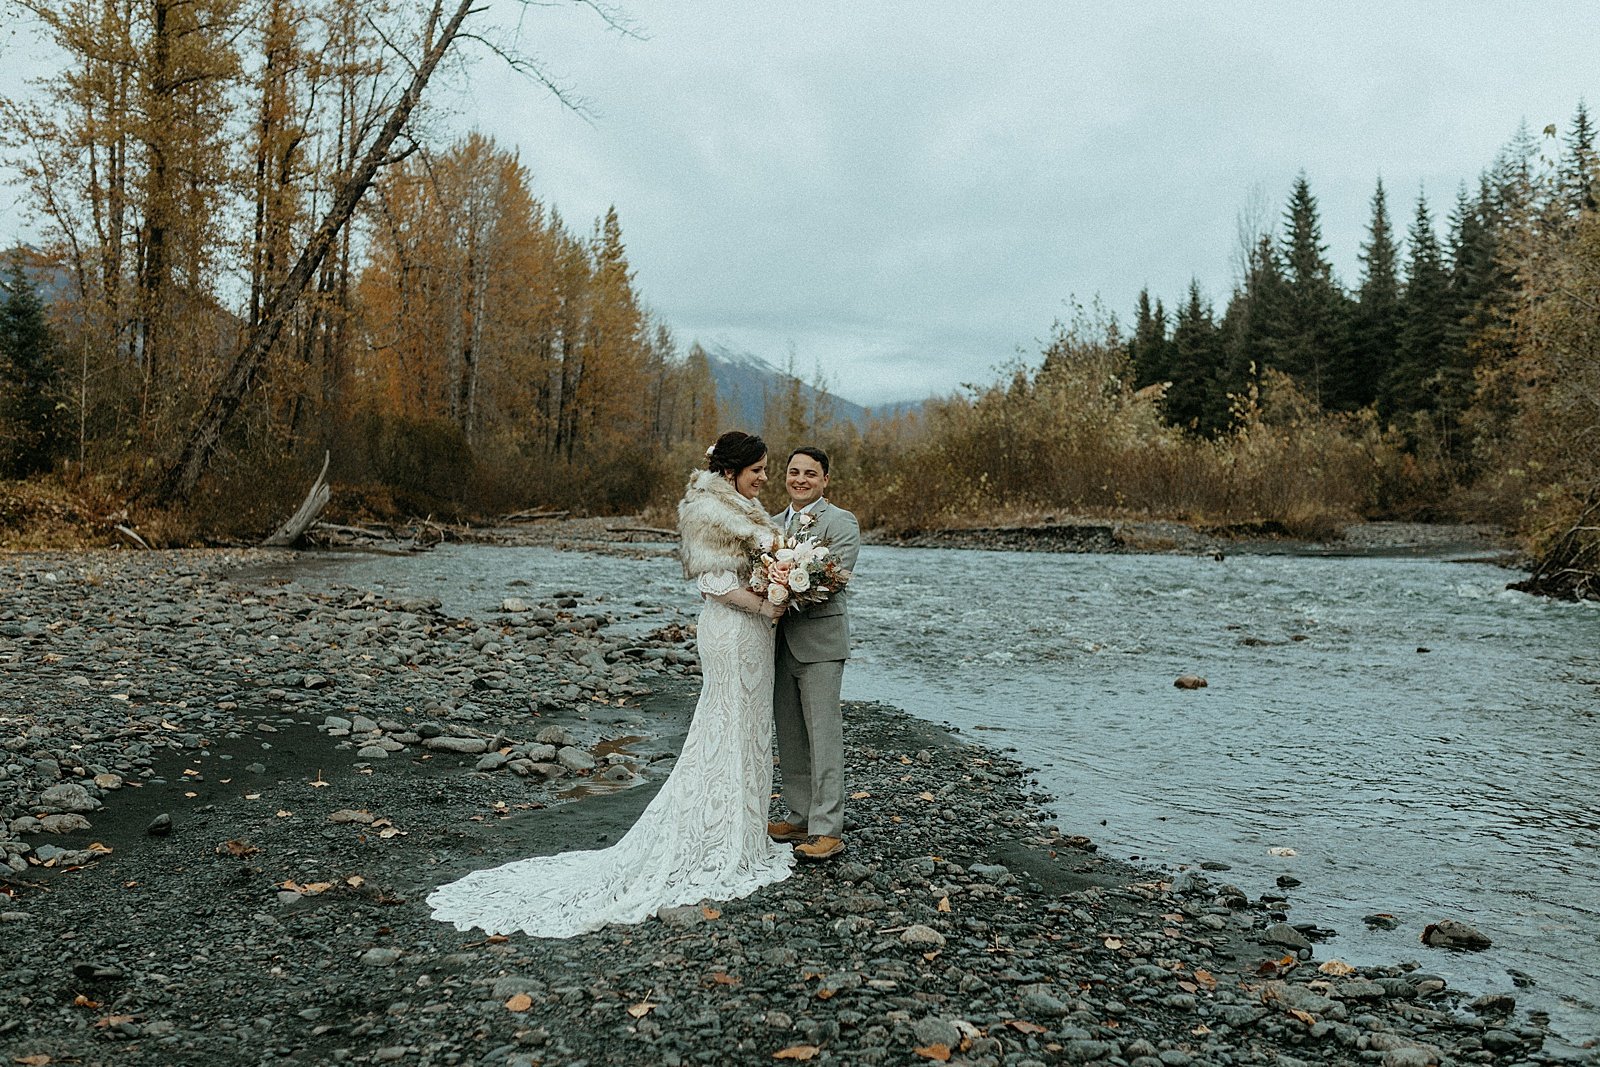  Newlyweds embracing on a riverbank in Alaska by photographer Rachel Struve 